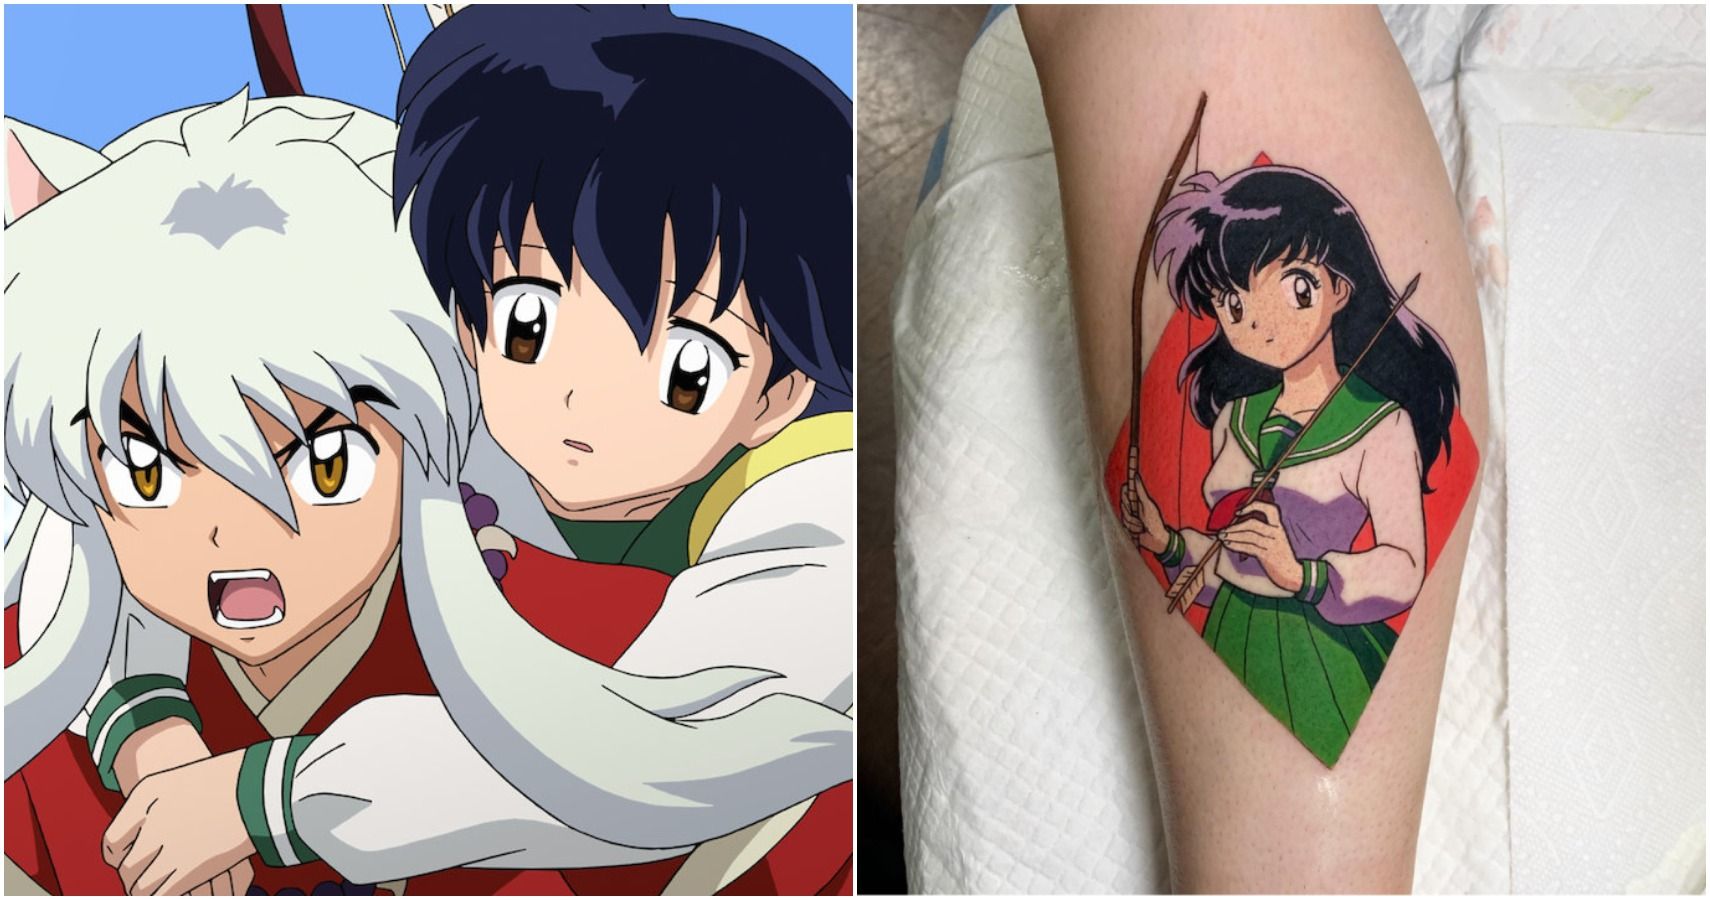 Melissa Chan on Instagram Shenron arm sleeve    tattooideas  tattoodesign tattooart tattoo tattoos tattooartist ink inked yatted  lasvegastattooartist